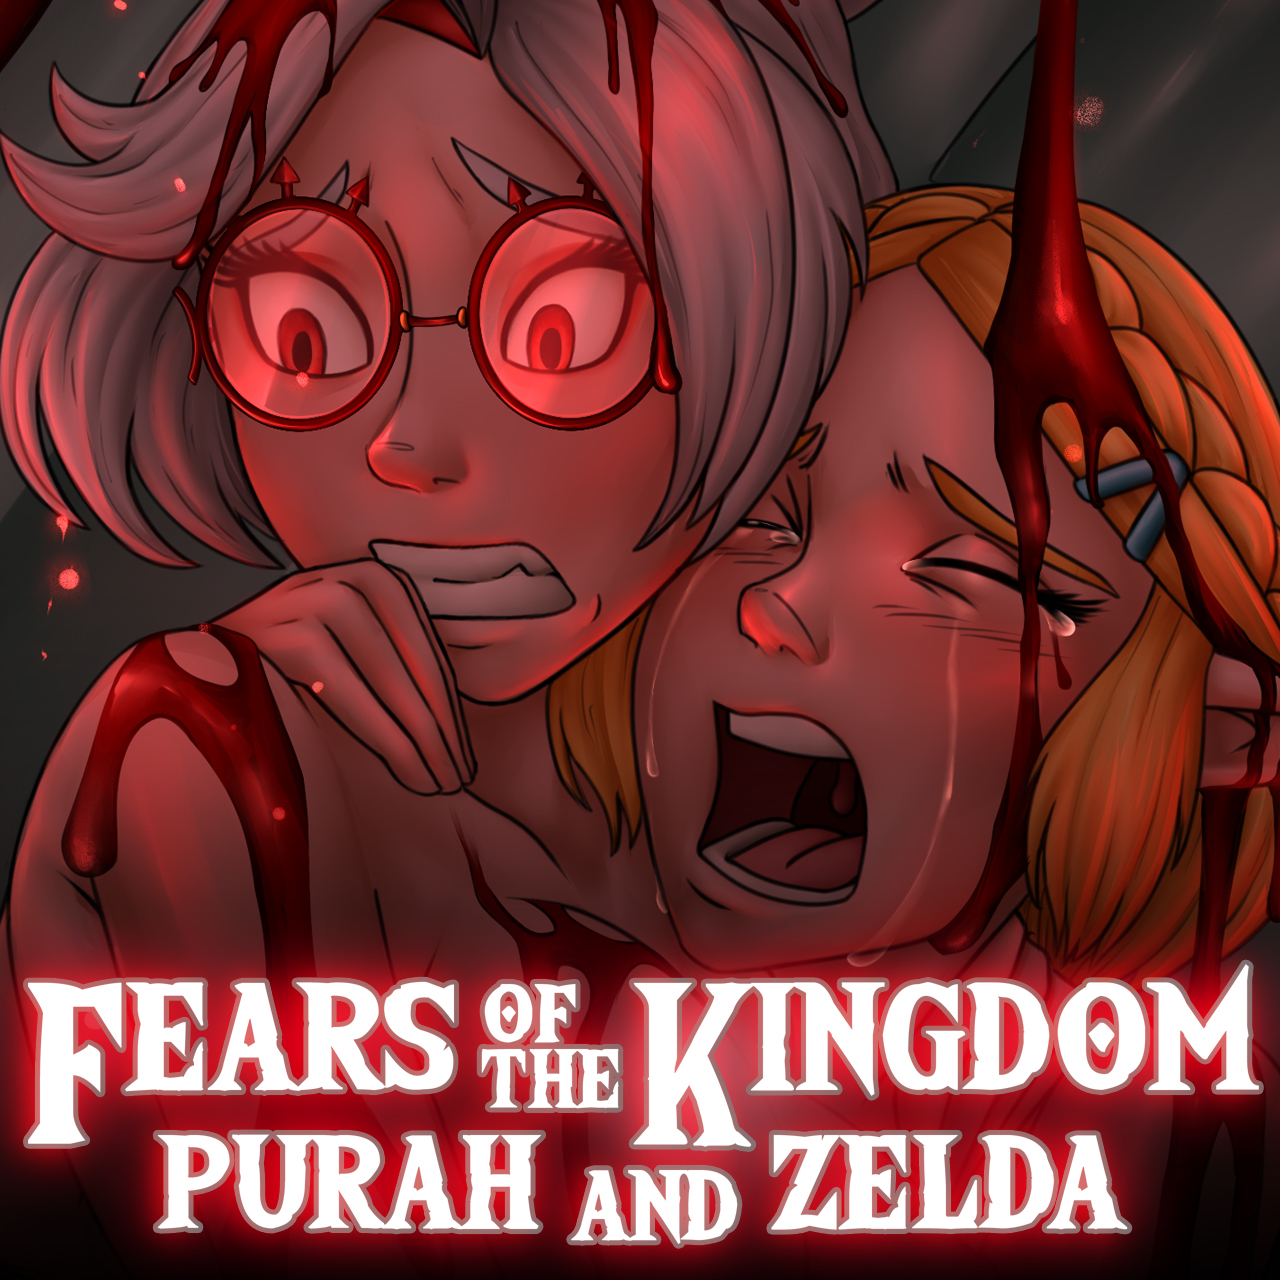 Fears of the Kingdom: Purah and Zelda